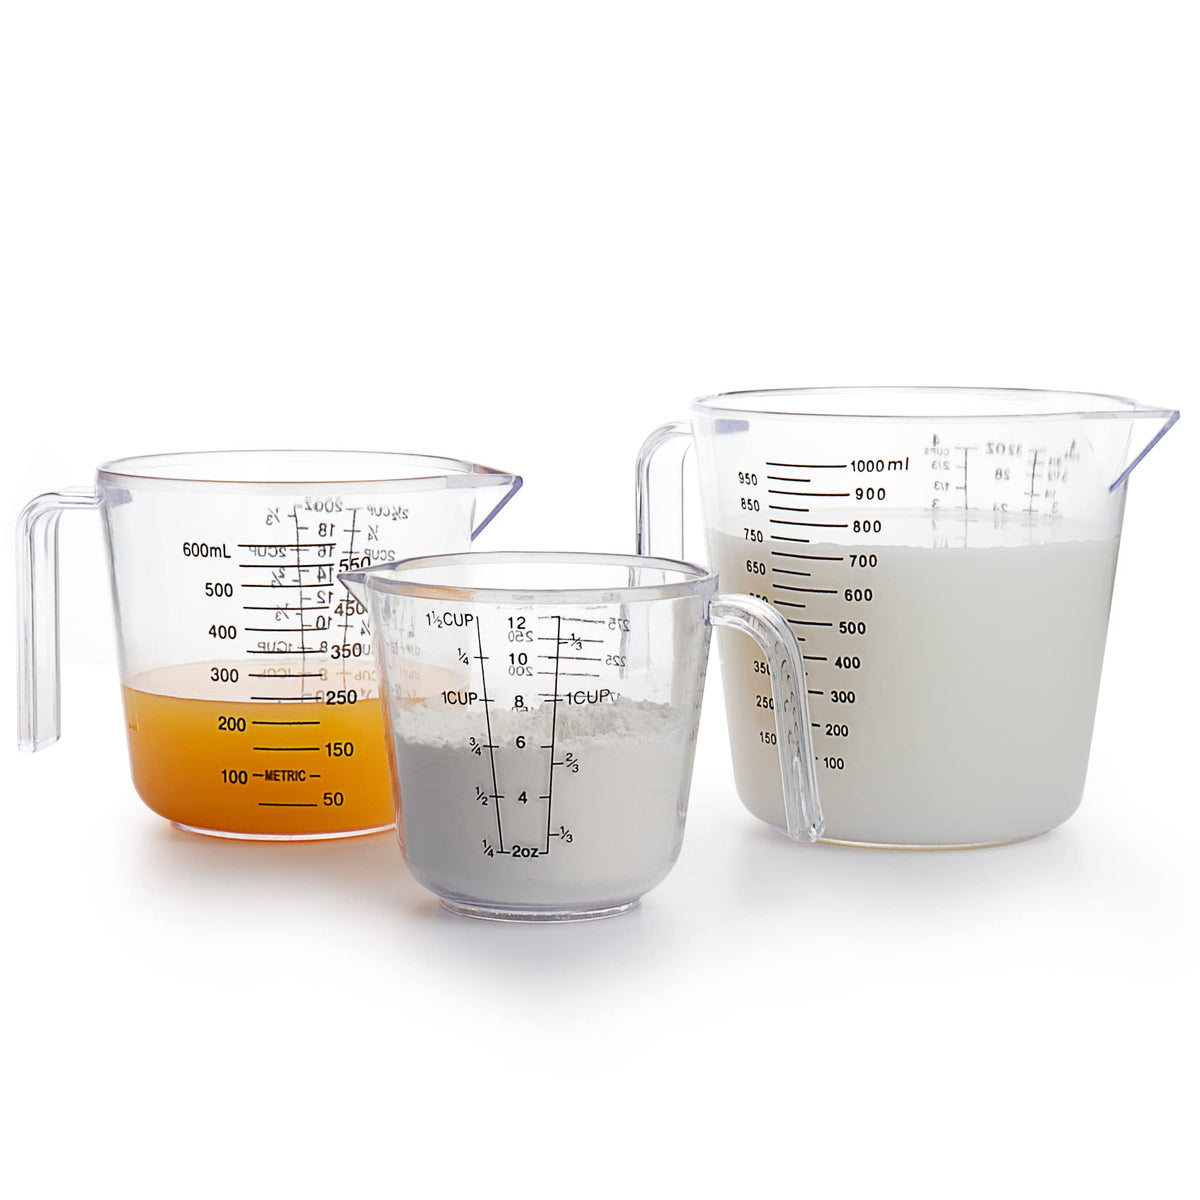 Vremi 3 Piece Plastic Measuring Cups Set - BPA Free Liquid Nesting